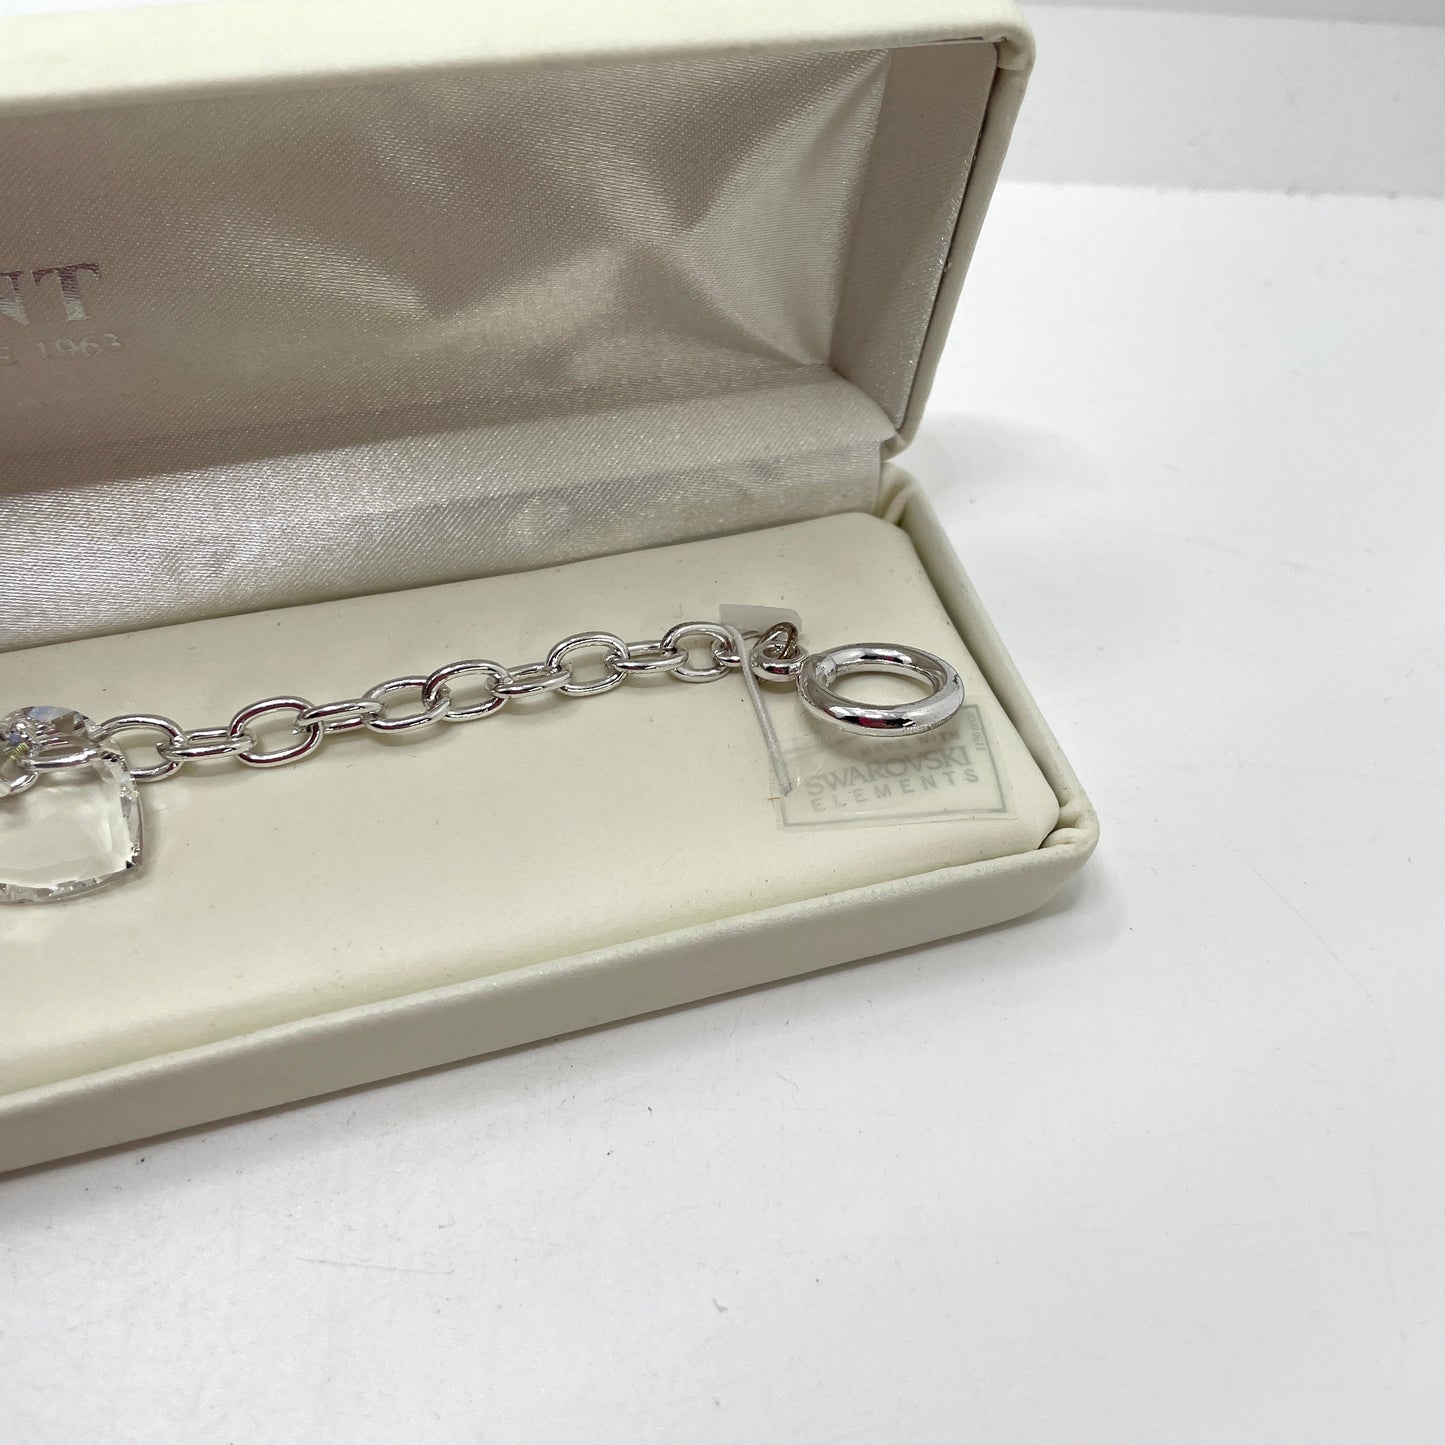 Heart Charm Bracelet made with Swarovski Crystal Elements